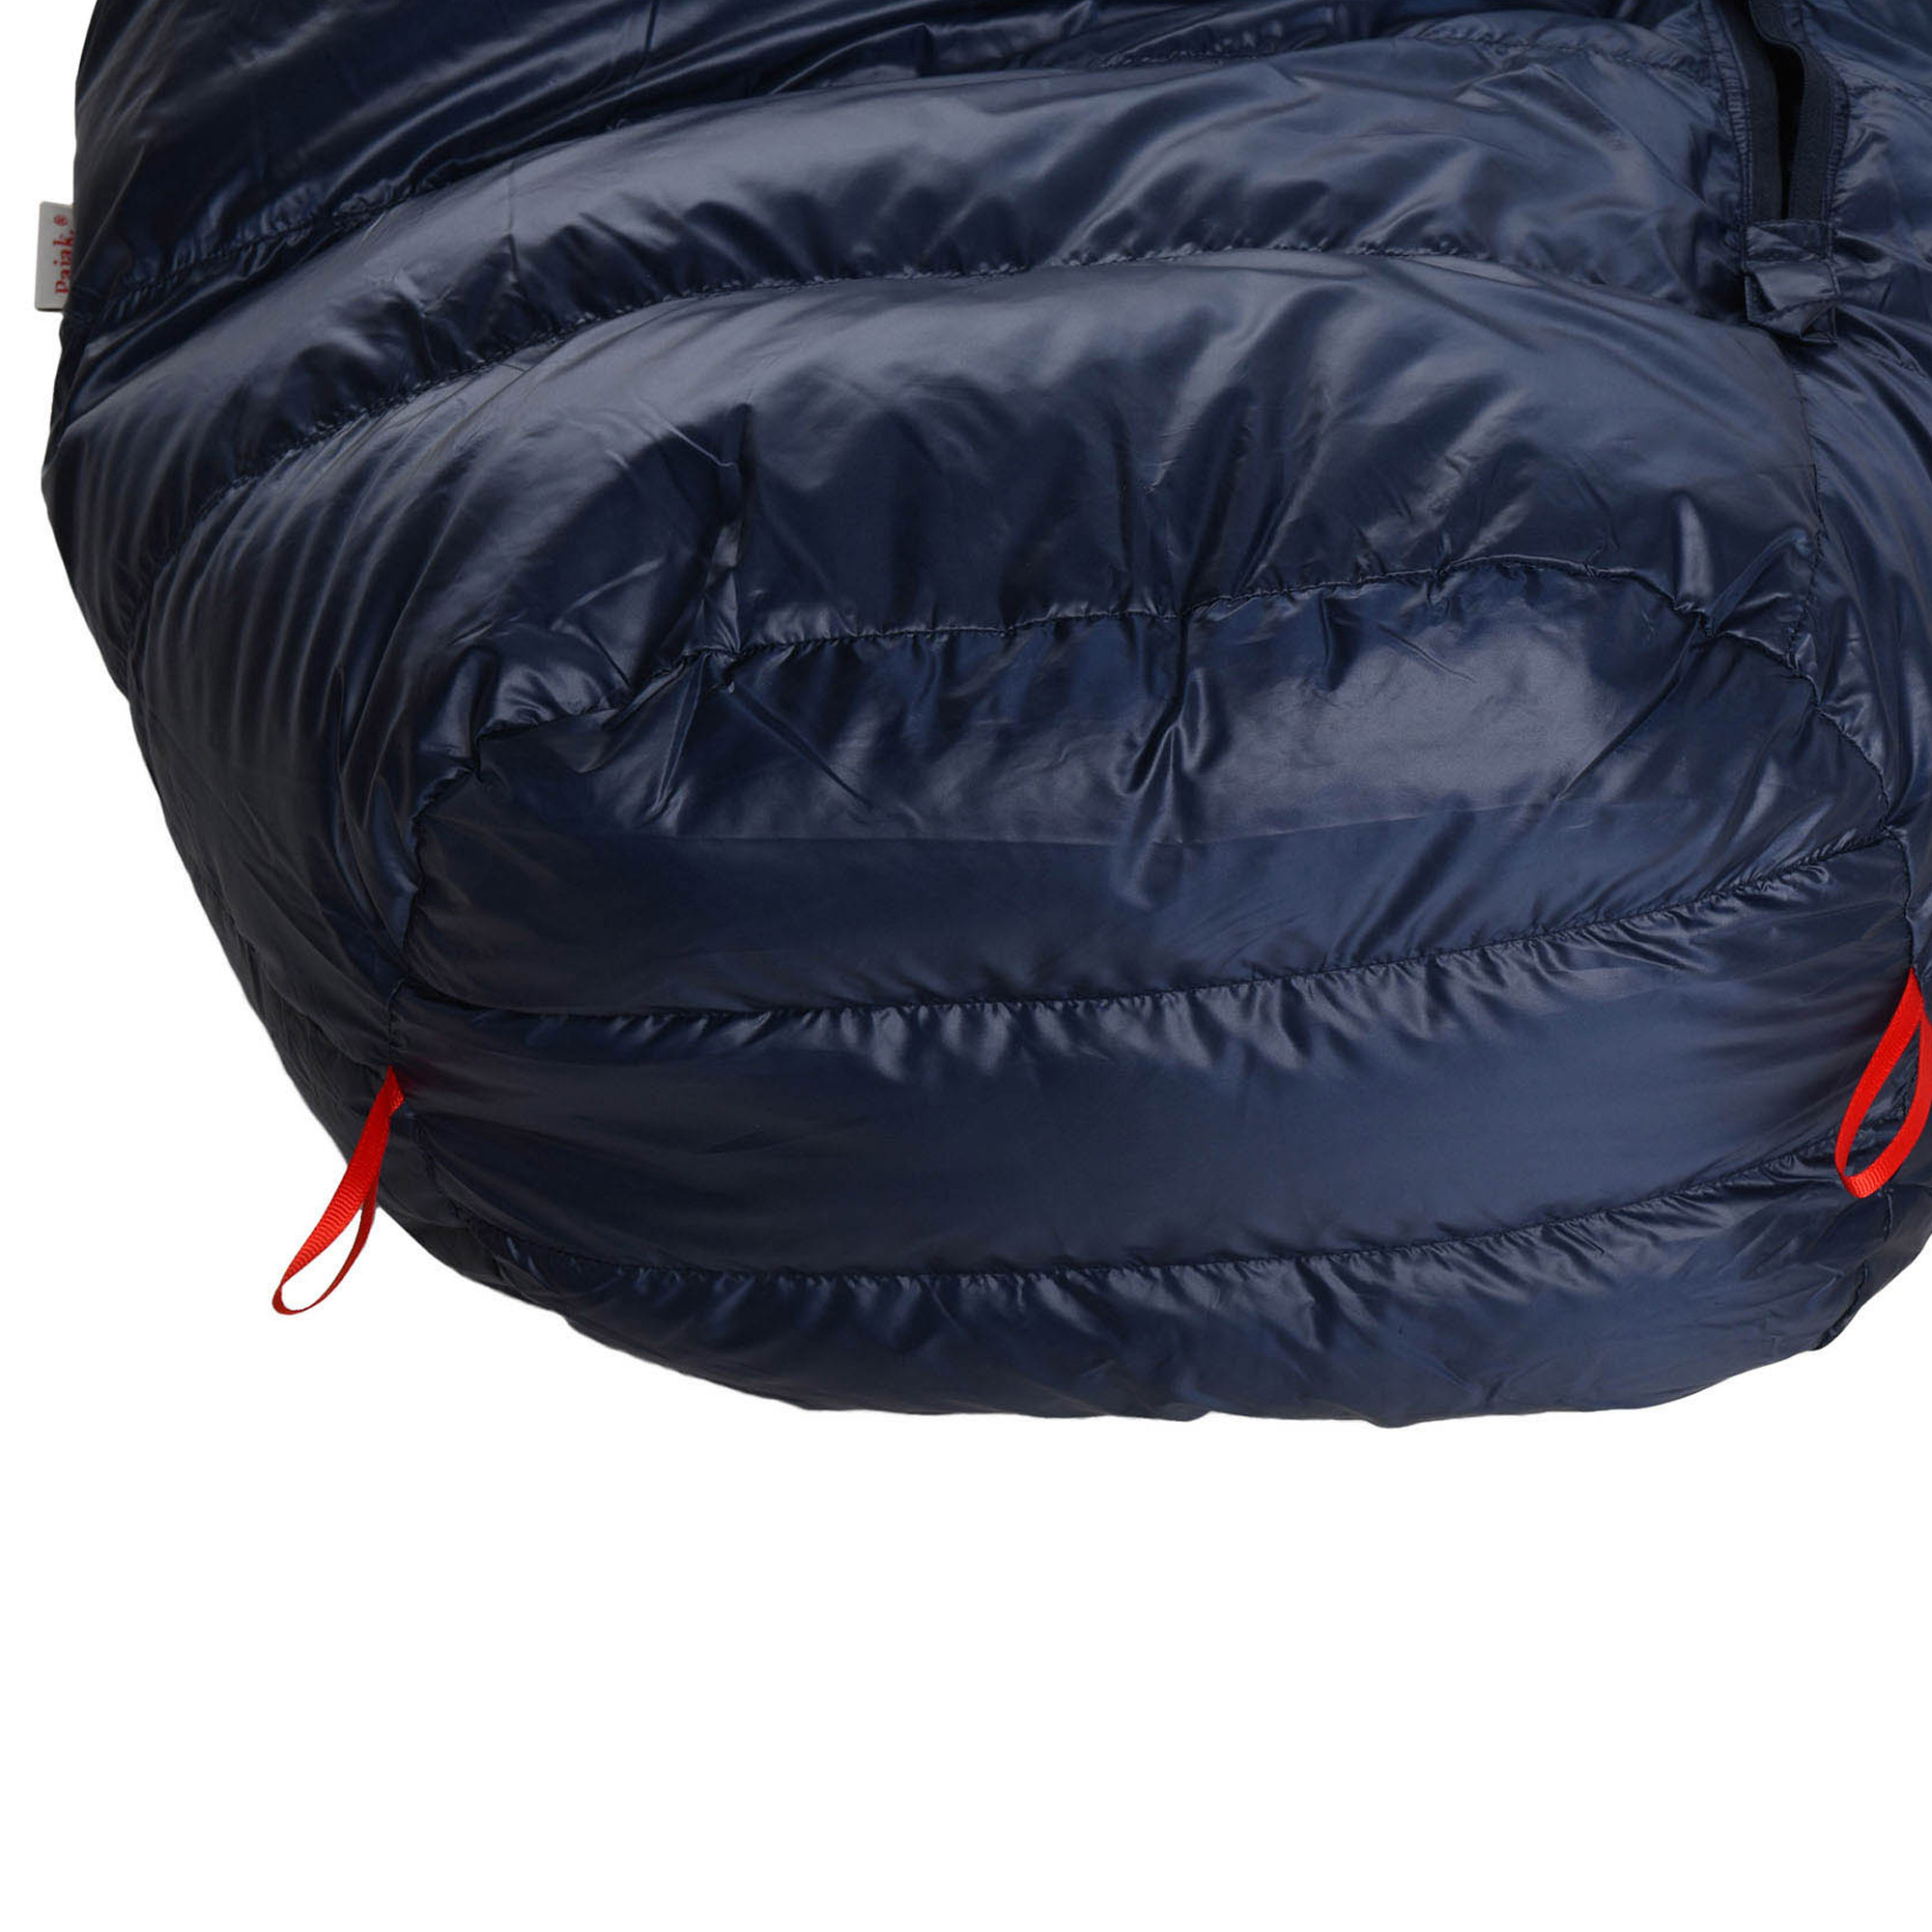 CORE, 550 sleeping bag, long, navy